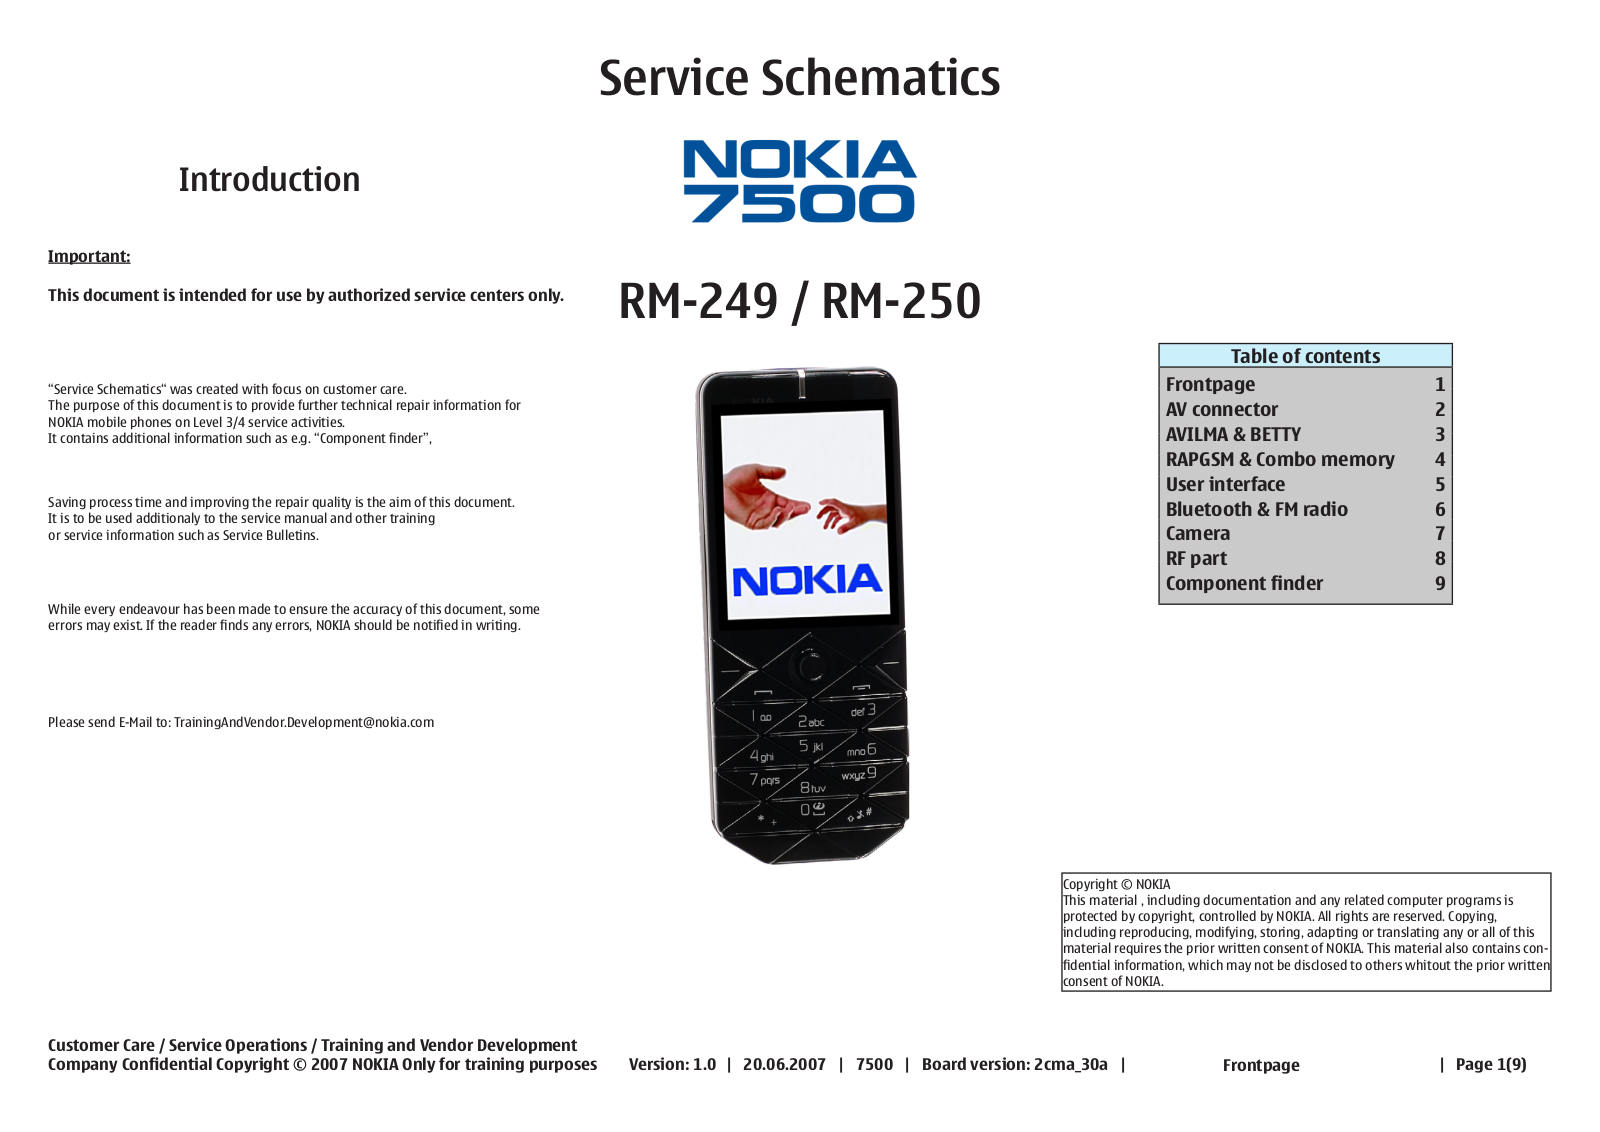 Nokia 7500 RM-249, 7500 RM-250 Schematic